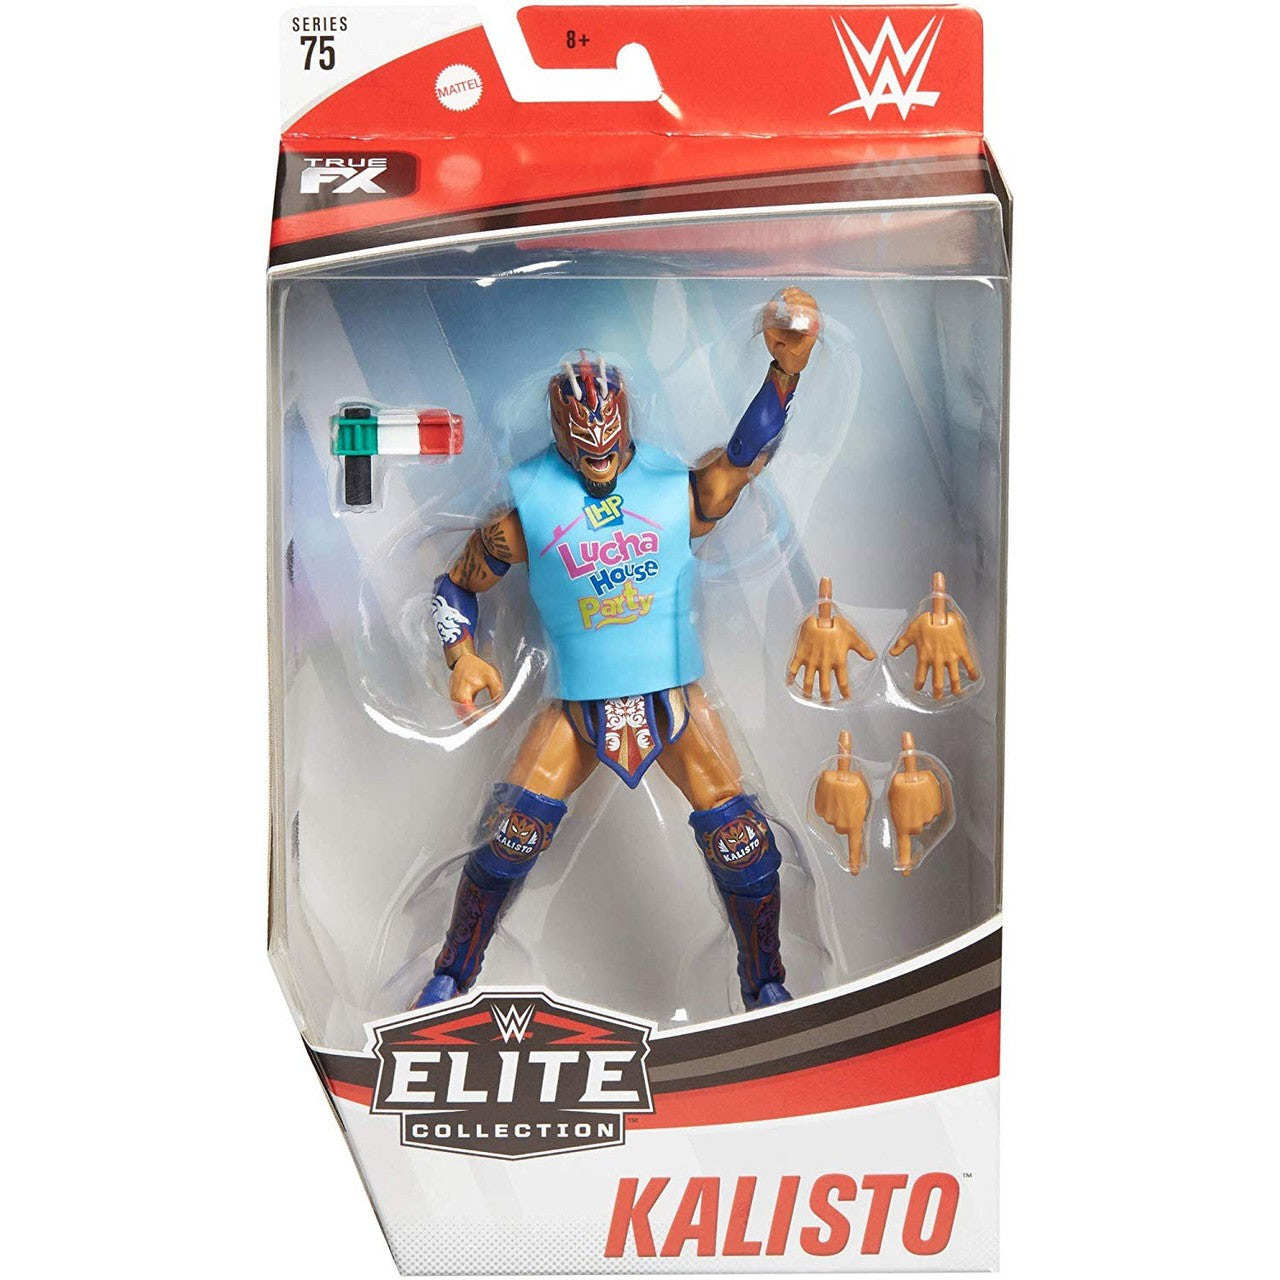 Image of WWE Elite Collection Series 75 - Kalisto